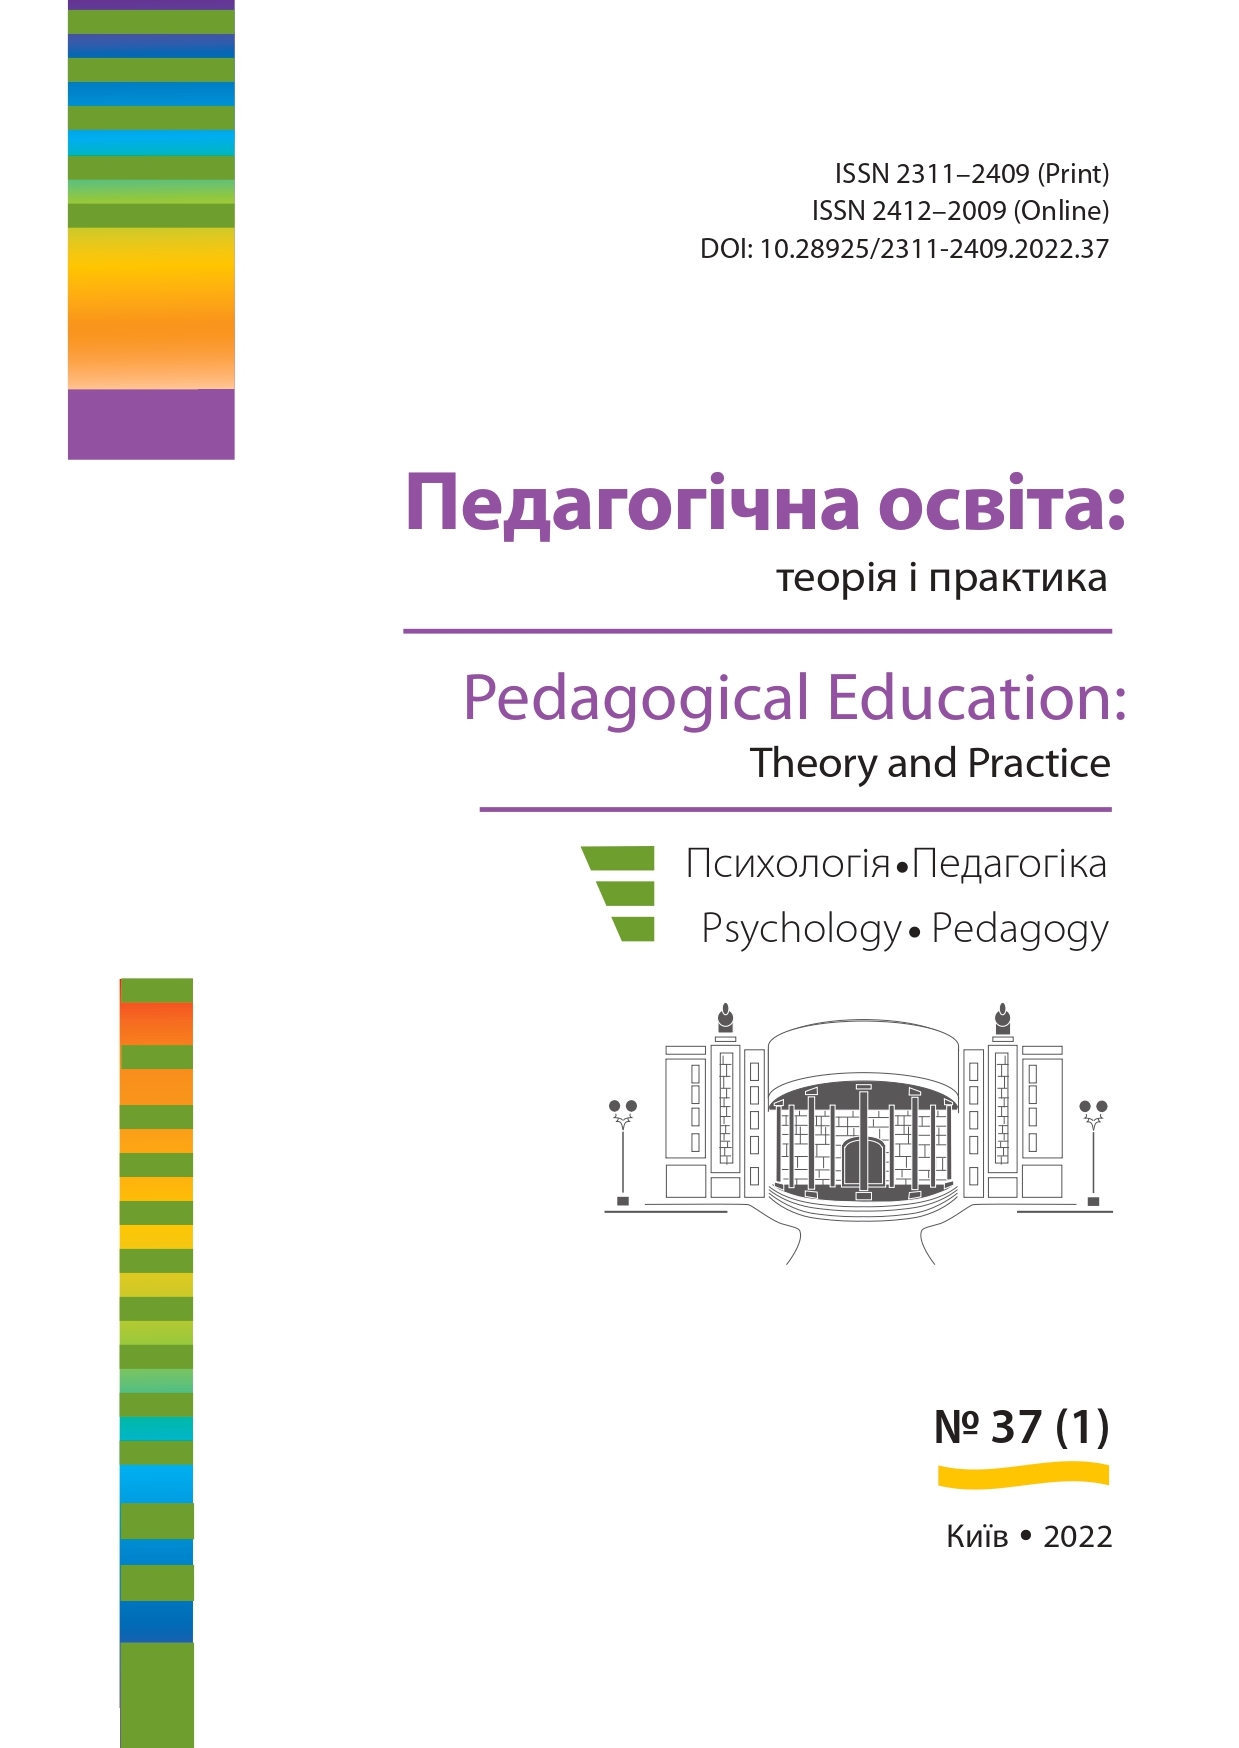 					View No. 37 (1) (2022): PEDAGOGOCAL EDUCATION: THEORY AND PRACTICE. PSYCHOLOGY. PEDAGOGY
				